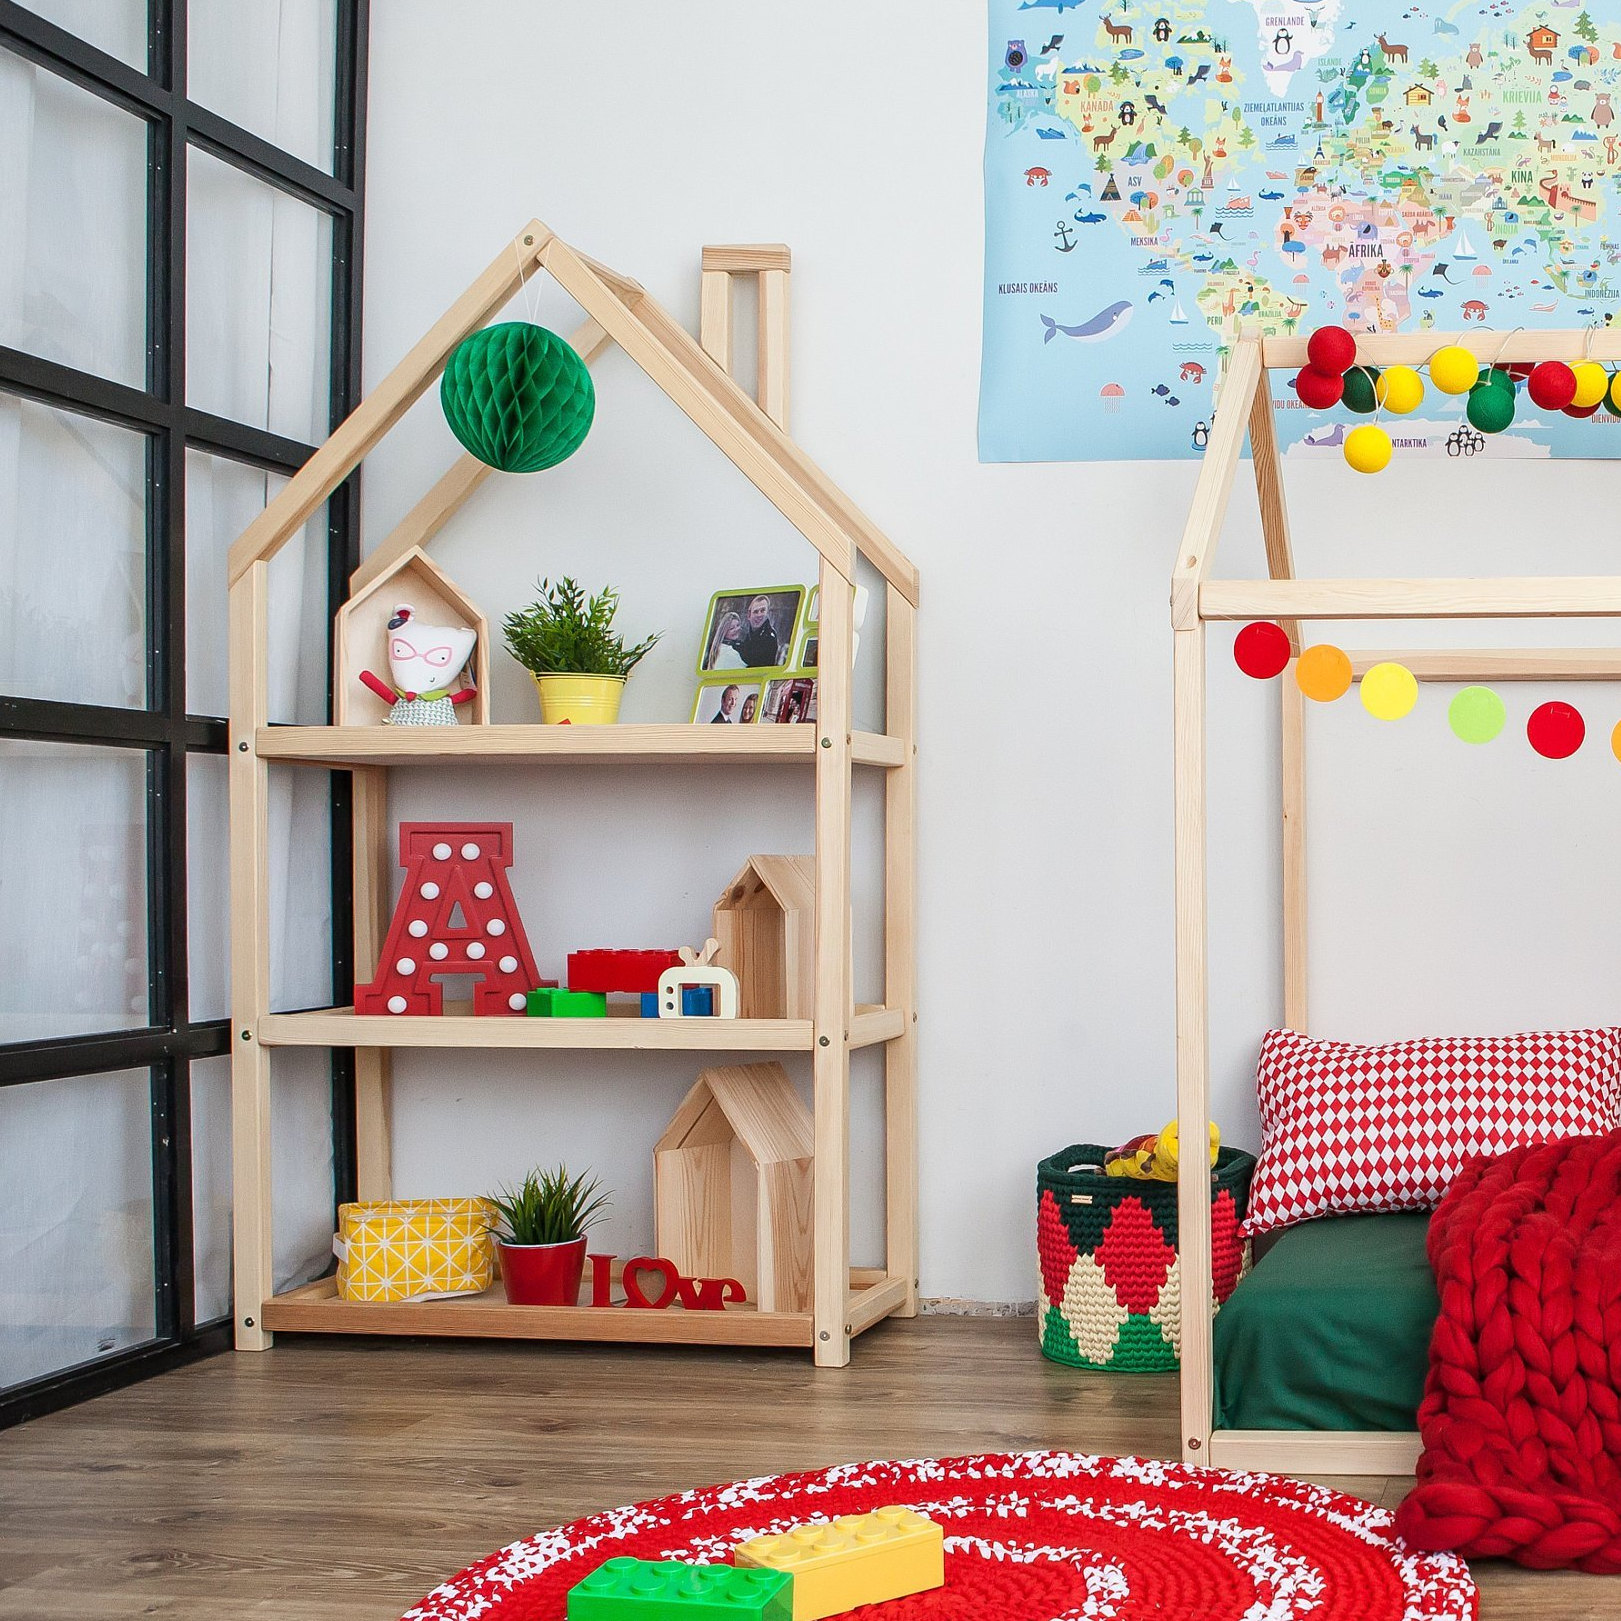 Kids Bedroom House Shaped Shelf Or, Shelves For A Kids Room